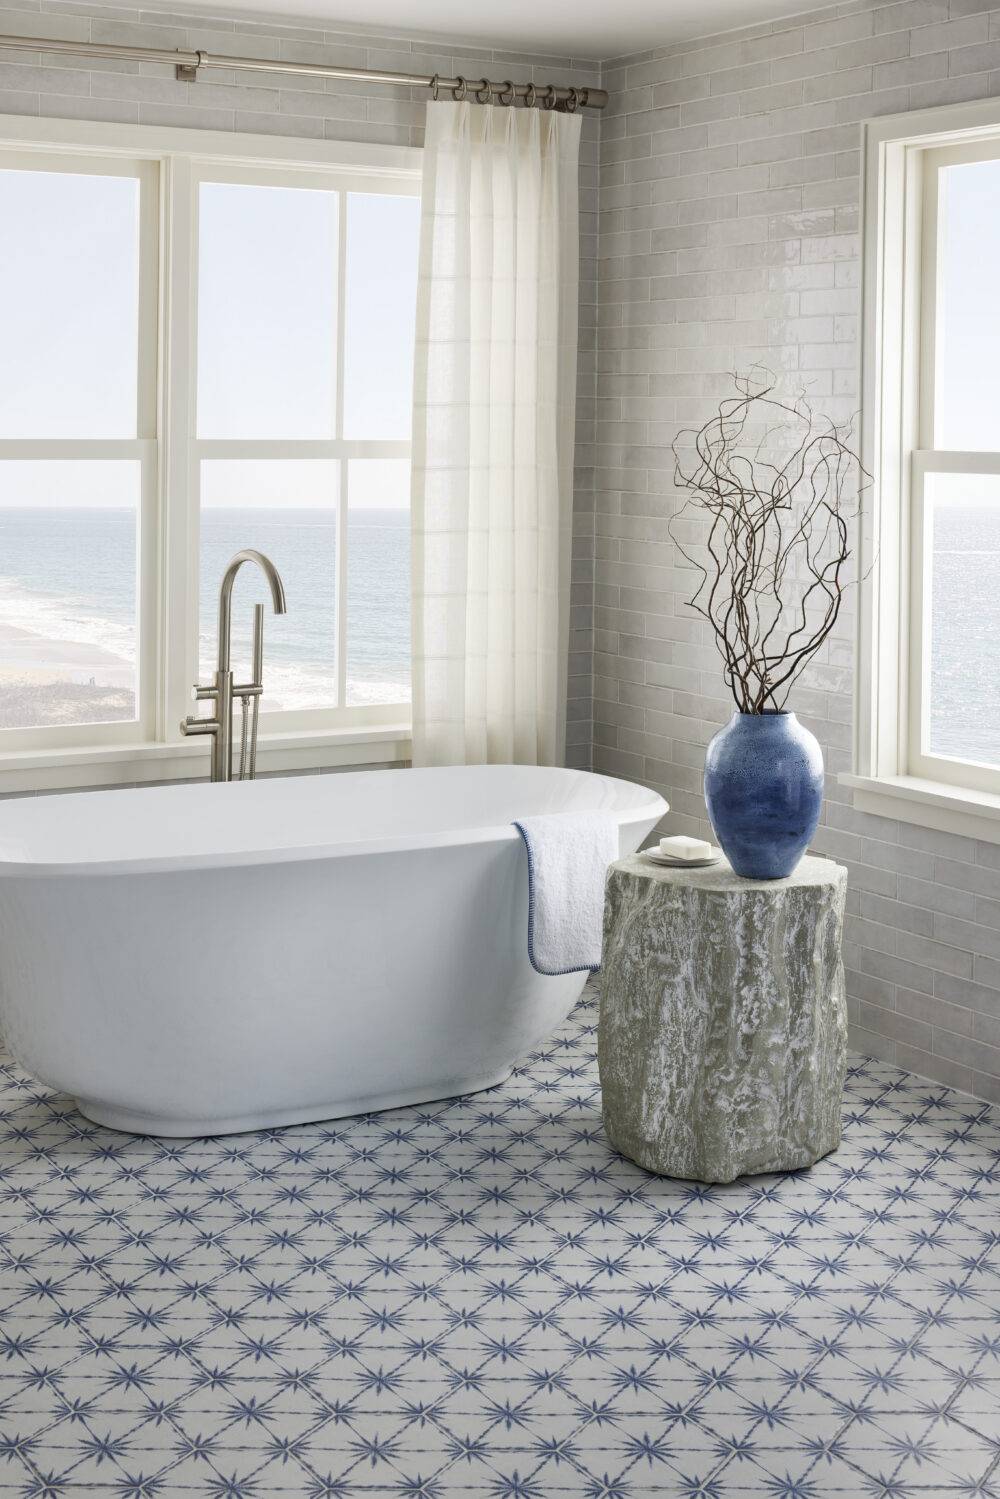 Bathroom featuring Summerland by Jeffery Alan Marks, blue patterned floor tile. 